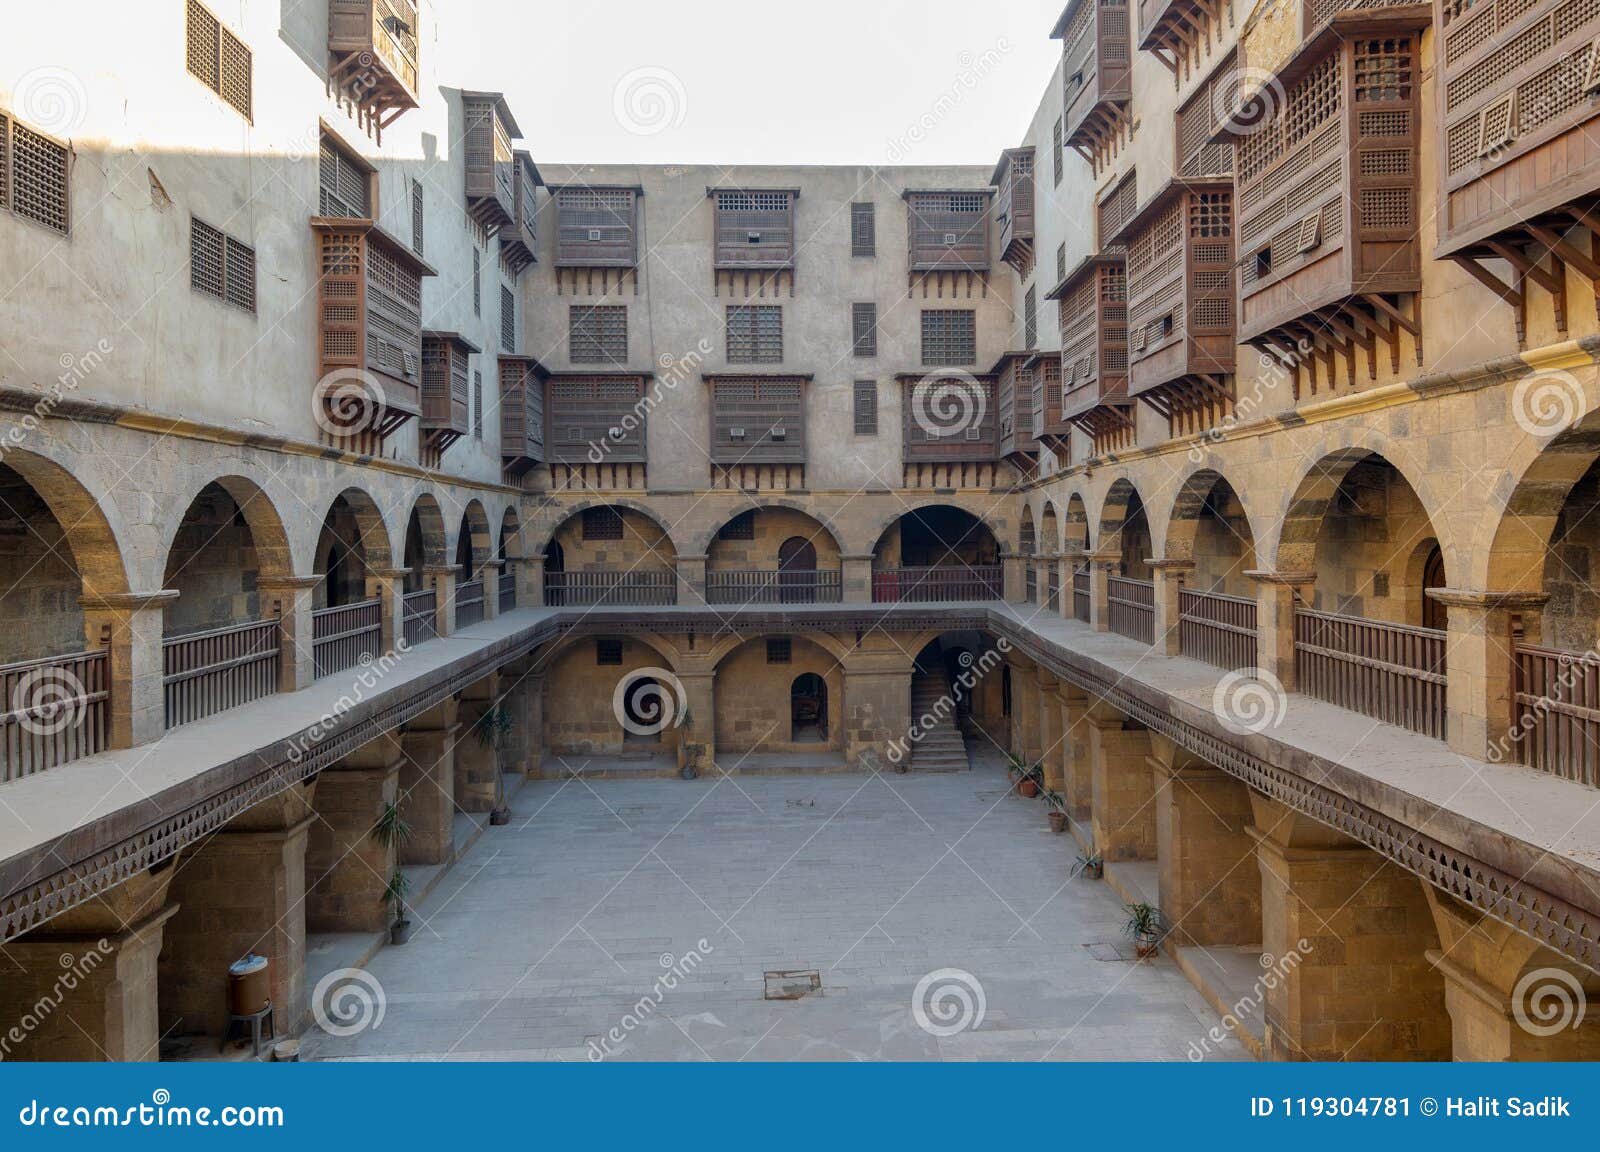 caravansary wikala of bazaraa, with vaulted arcades and windows covered by interleaved wooden grids mashrabiyya, cairo, egypt